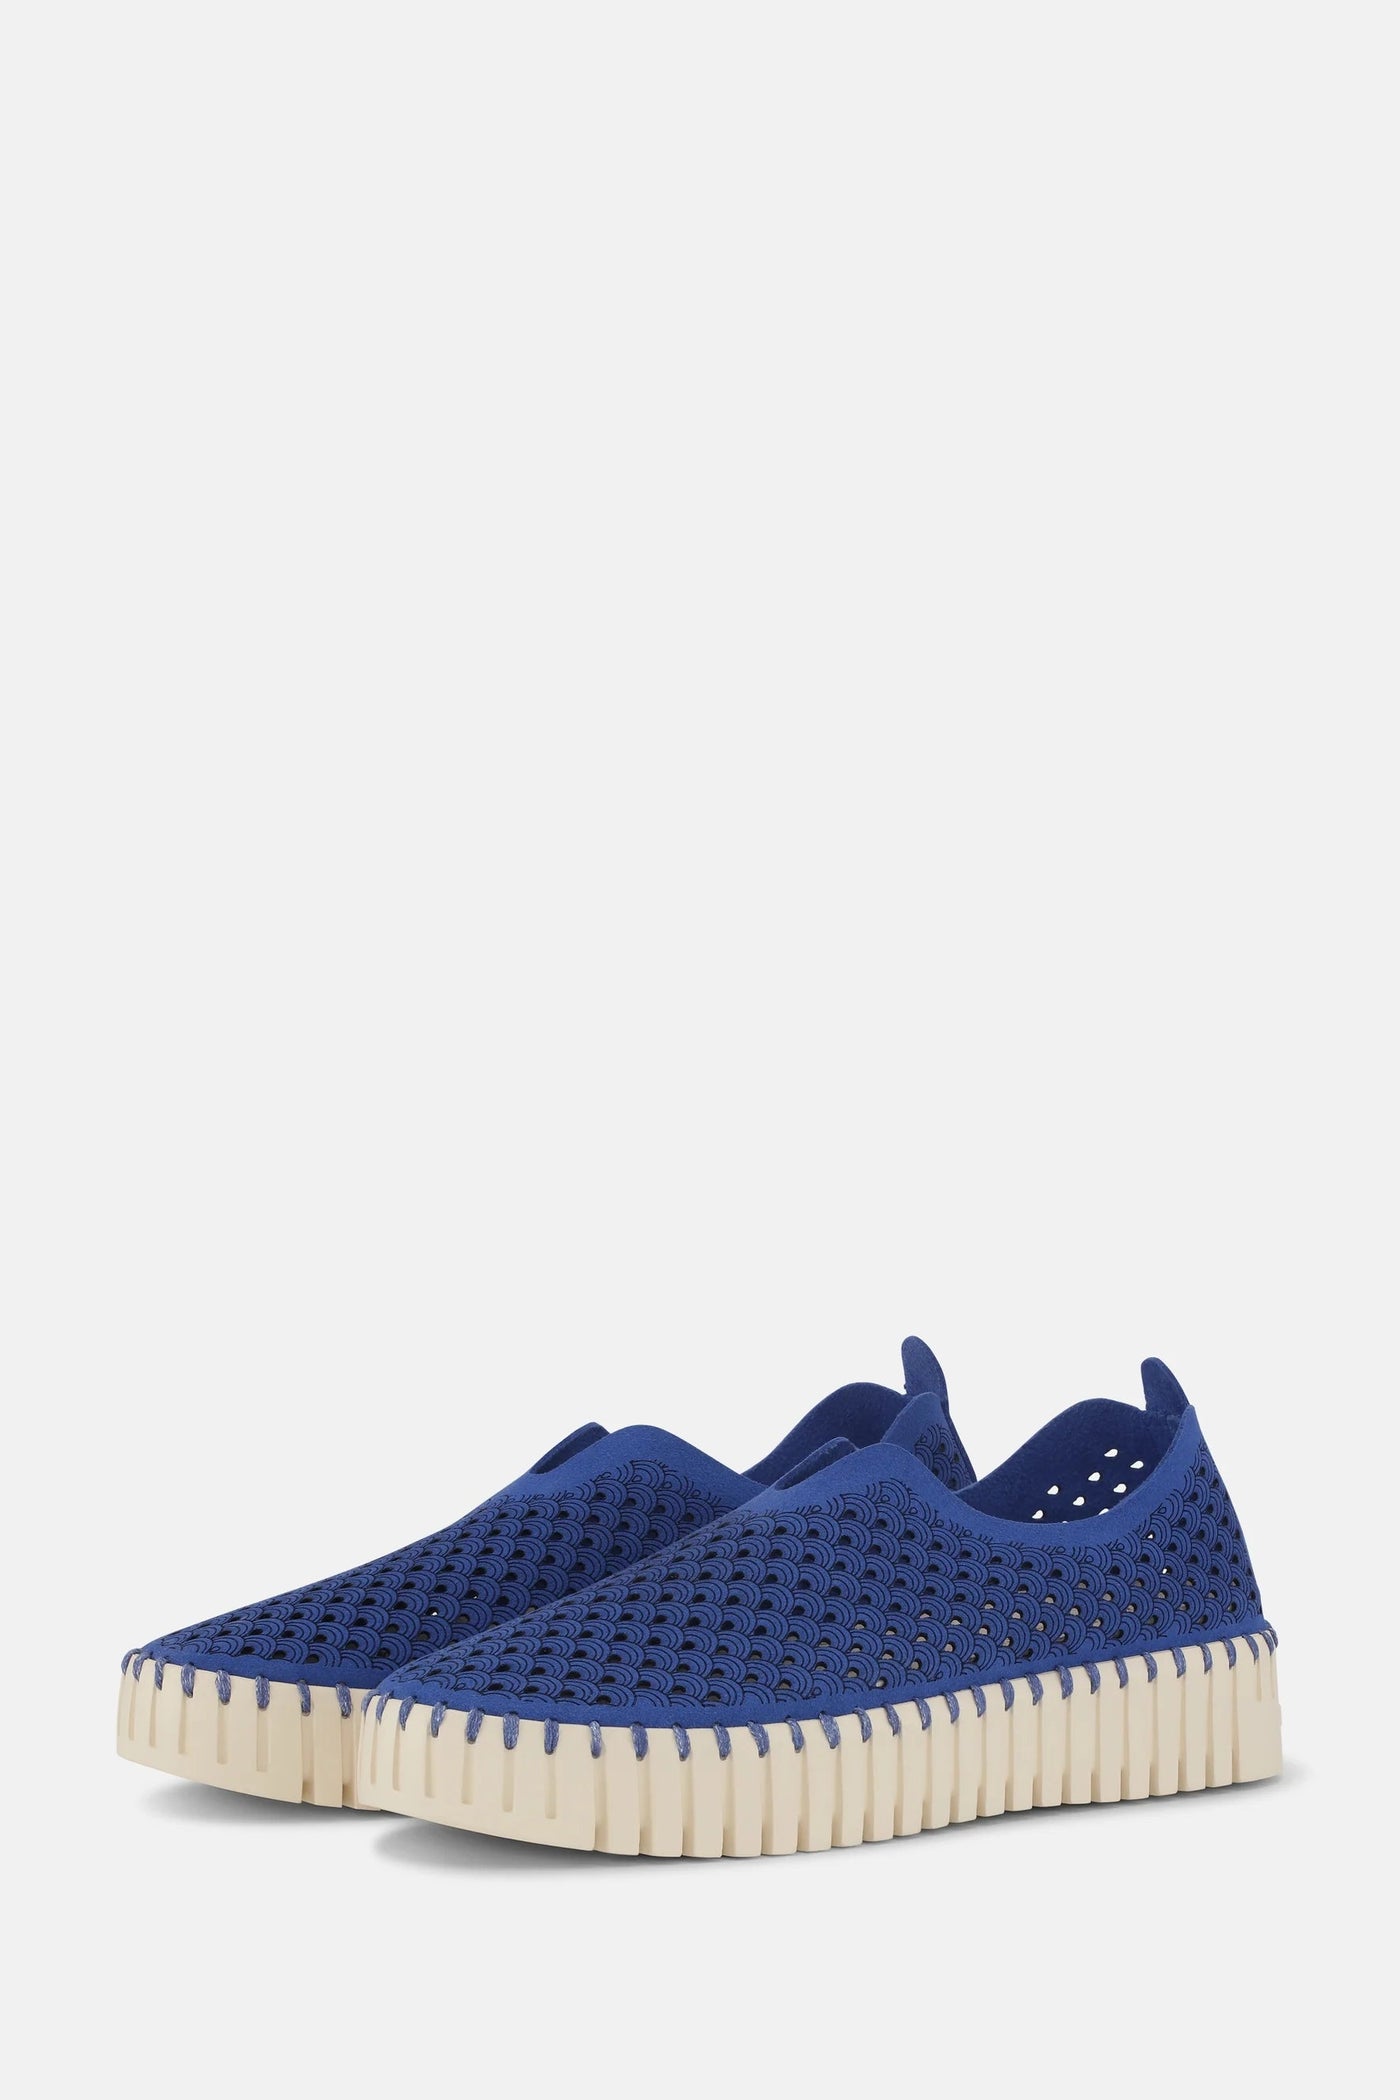 Ilse Jacobsen Platform Tulip Shoes in Blue Web-Accessories-Ohh! By Gum - Shop Sustainable